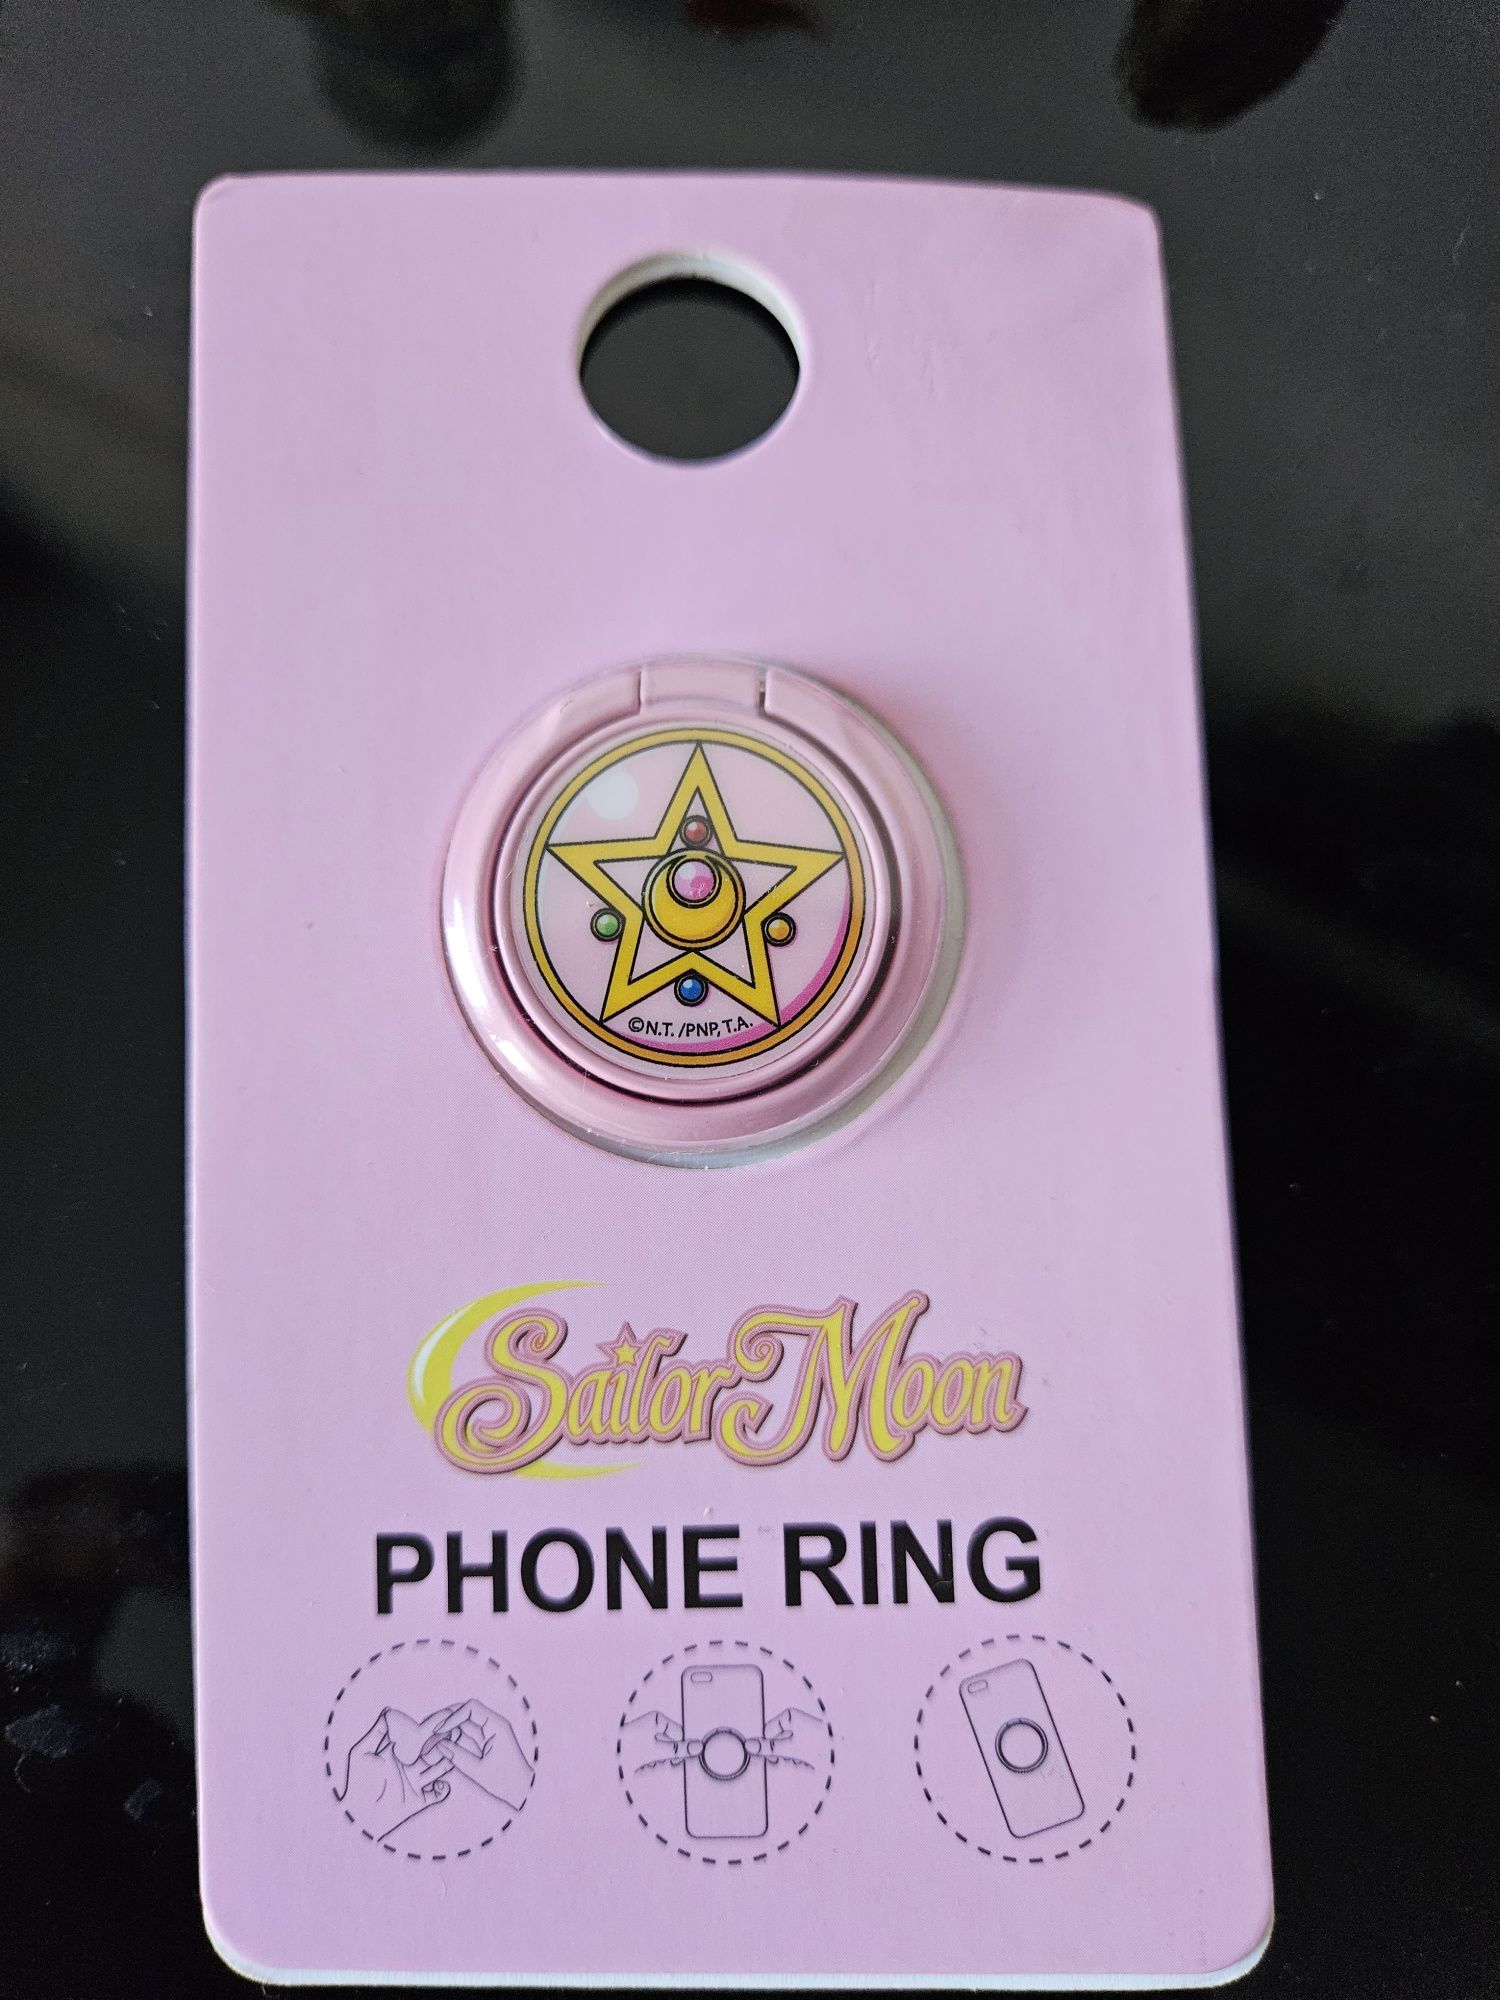 Sailor moon - phone ring